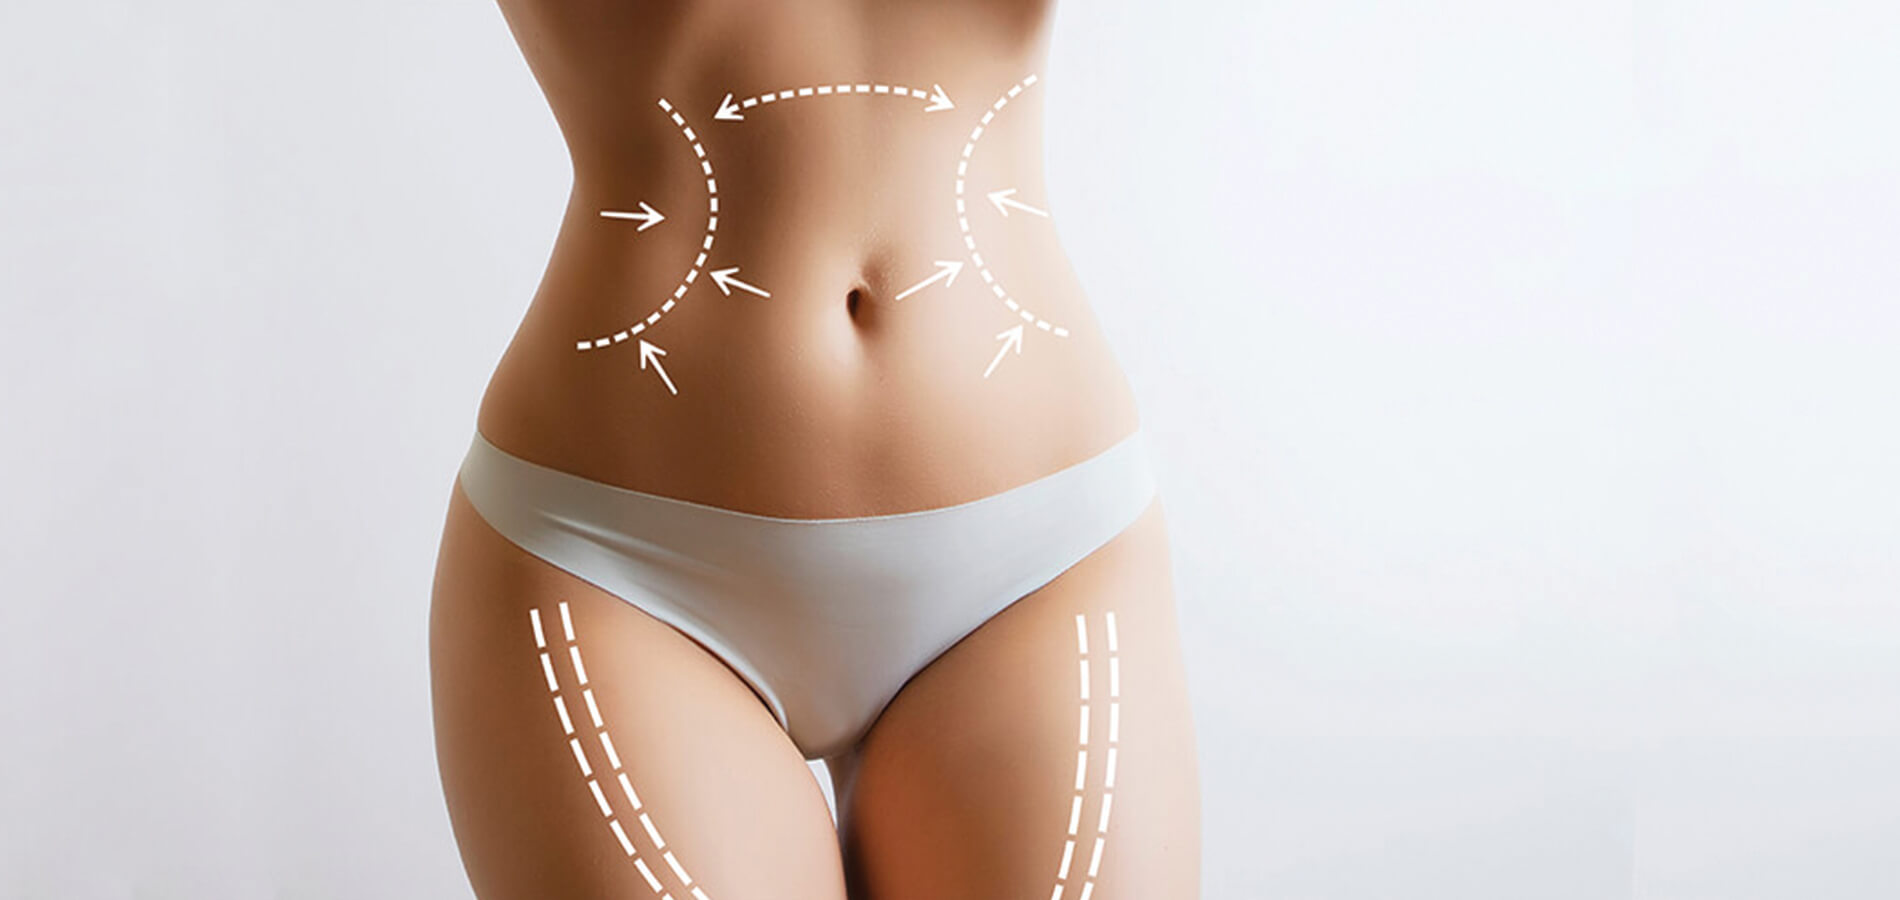 Liposuction and J-Plasma for tightening abdomen